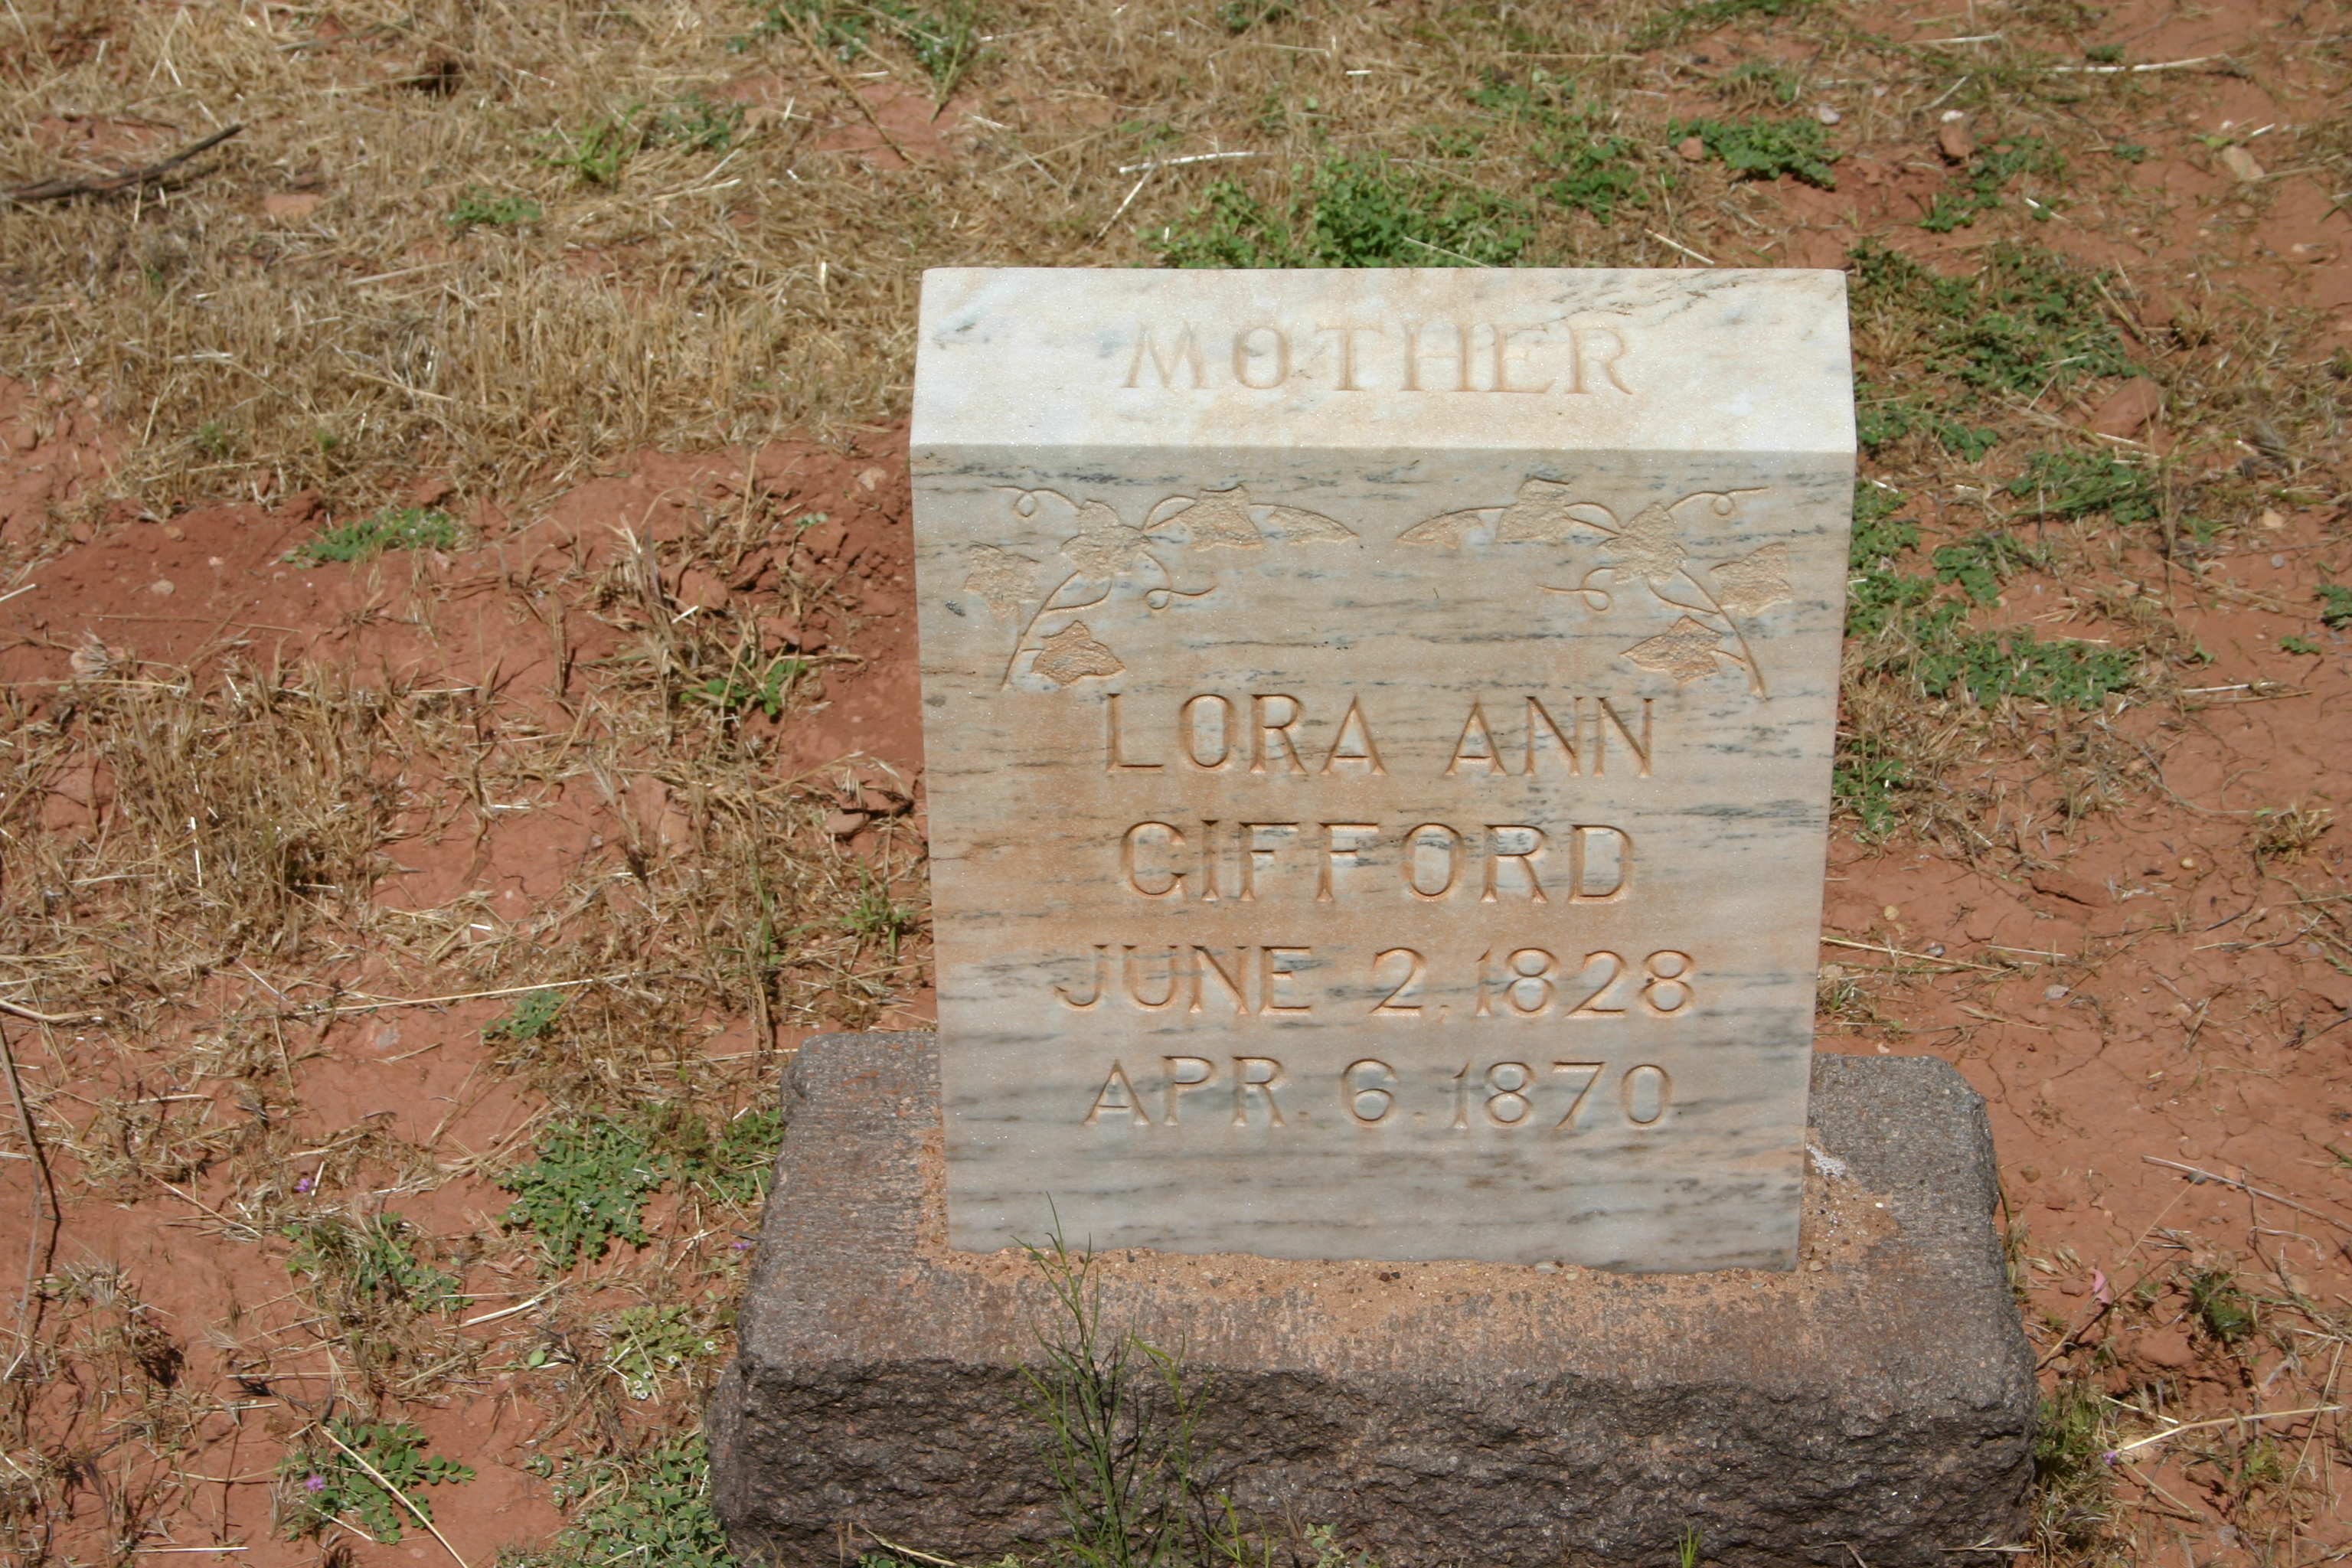 Gravestone in the Shunesburg Cemetery